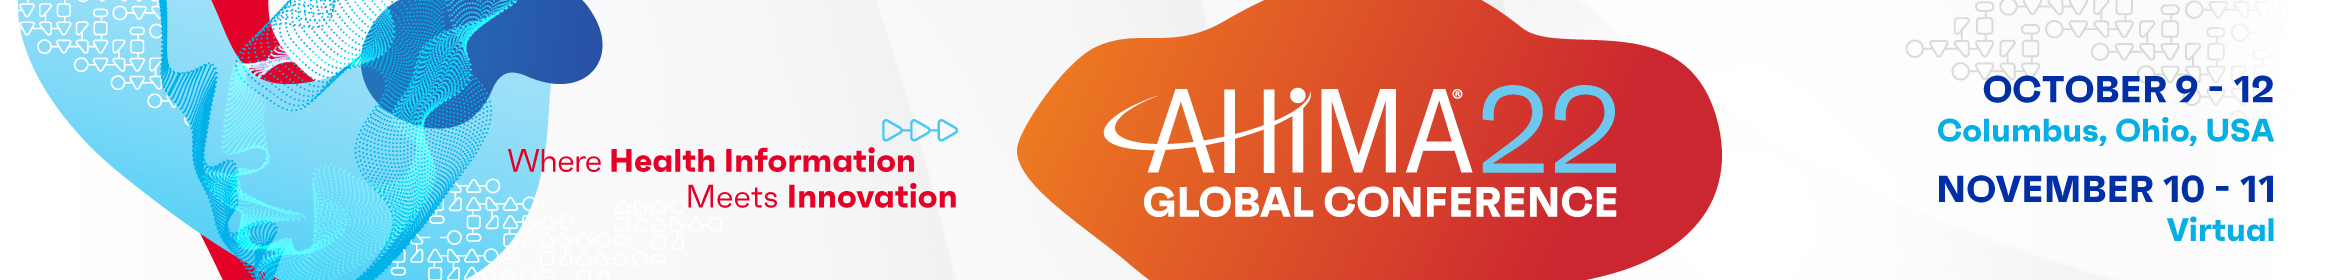 AHIMA22 Global Conference  Main banner